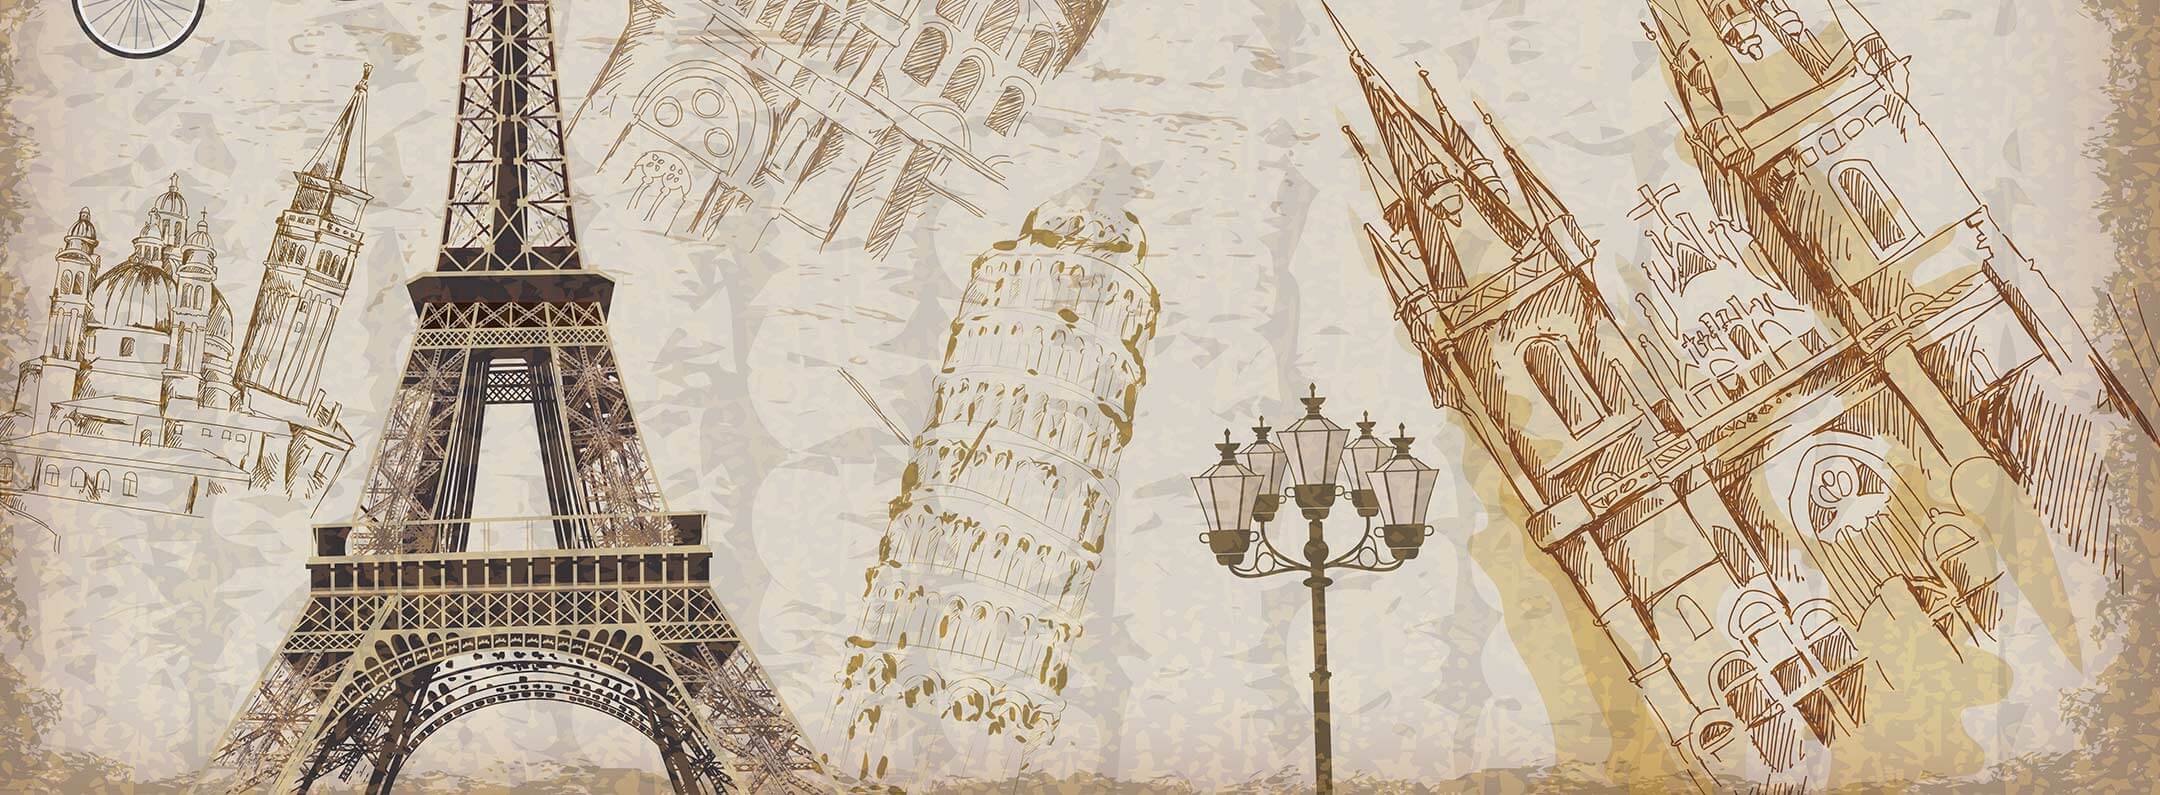 Eiffel Tower & Castle wallpaper mural